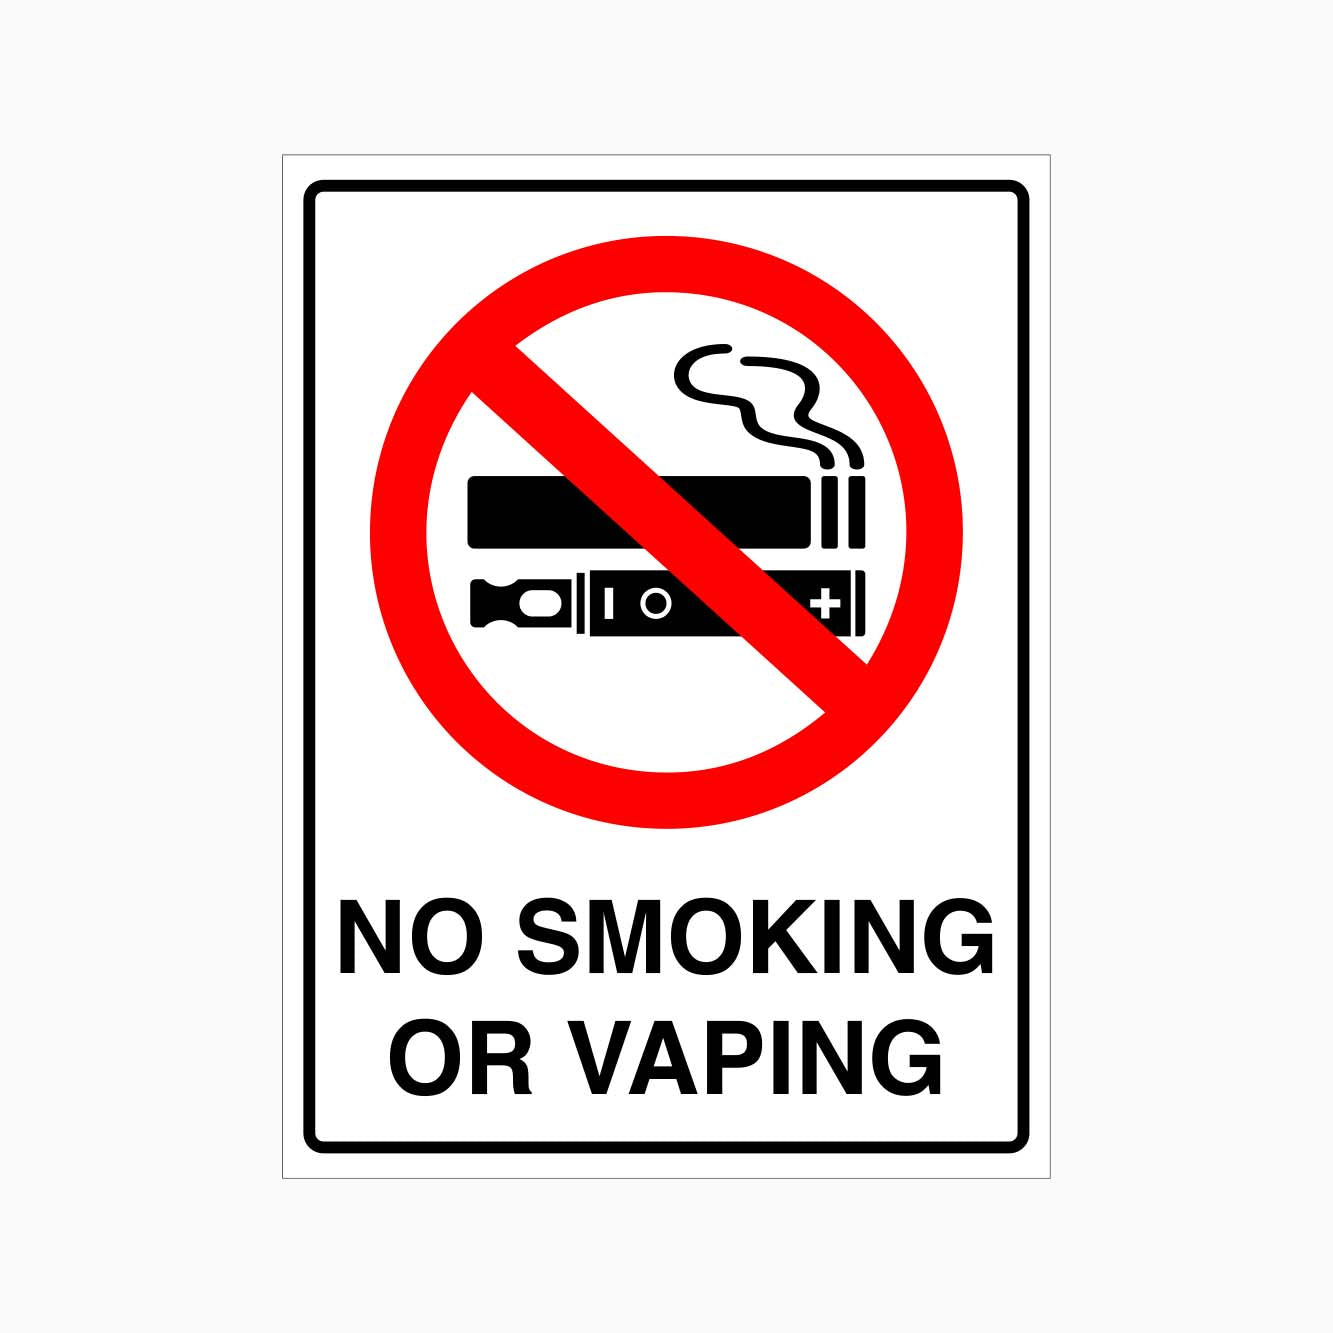 NO SMOKING OR VAPING SIGN - GET SIGNS